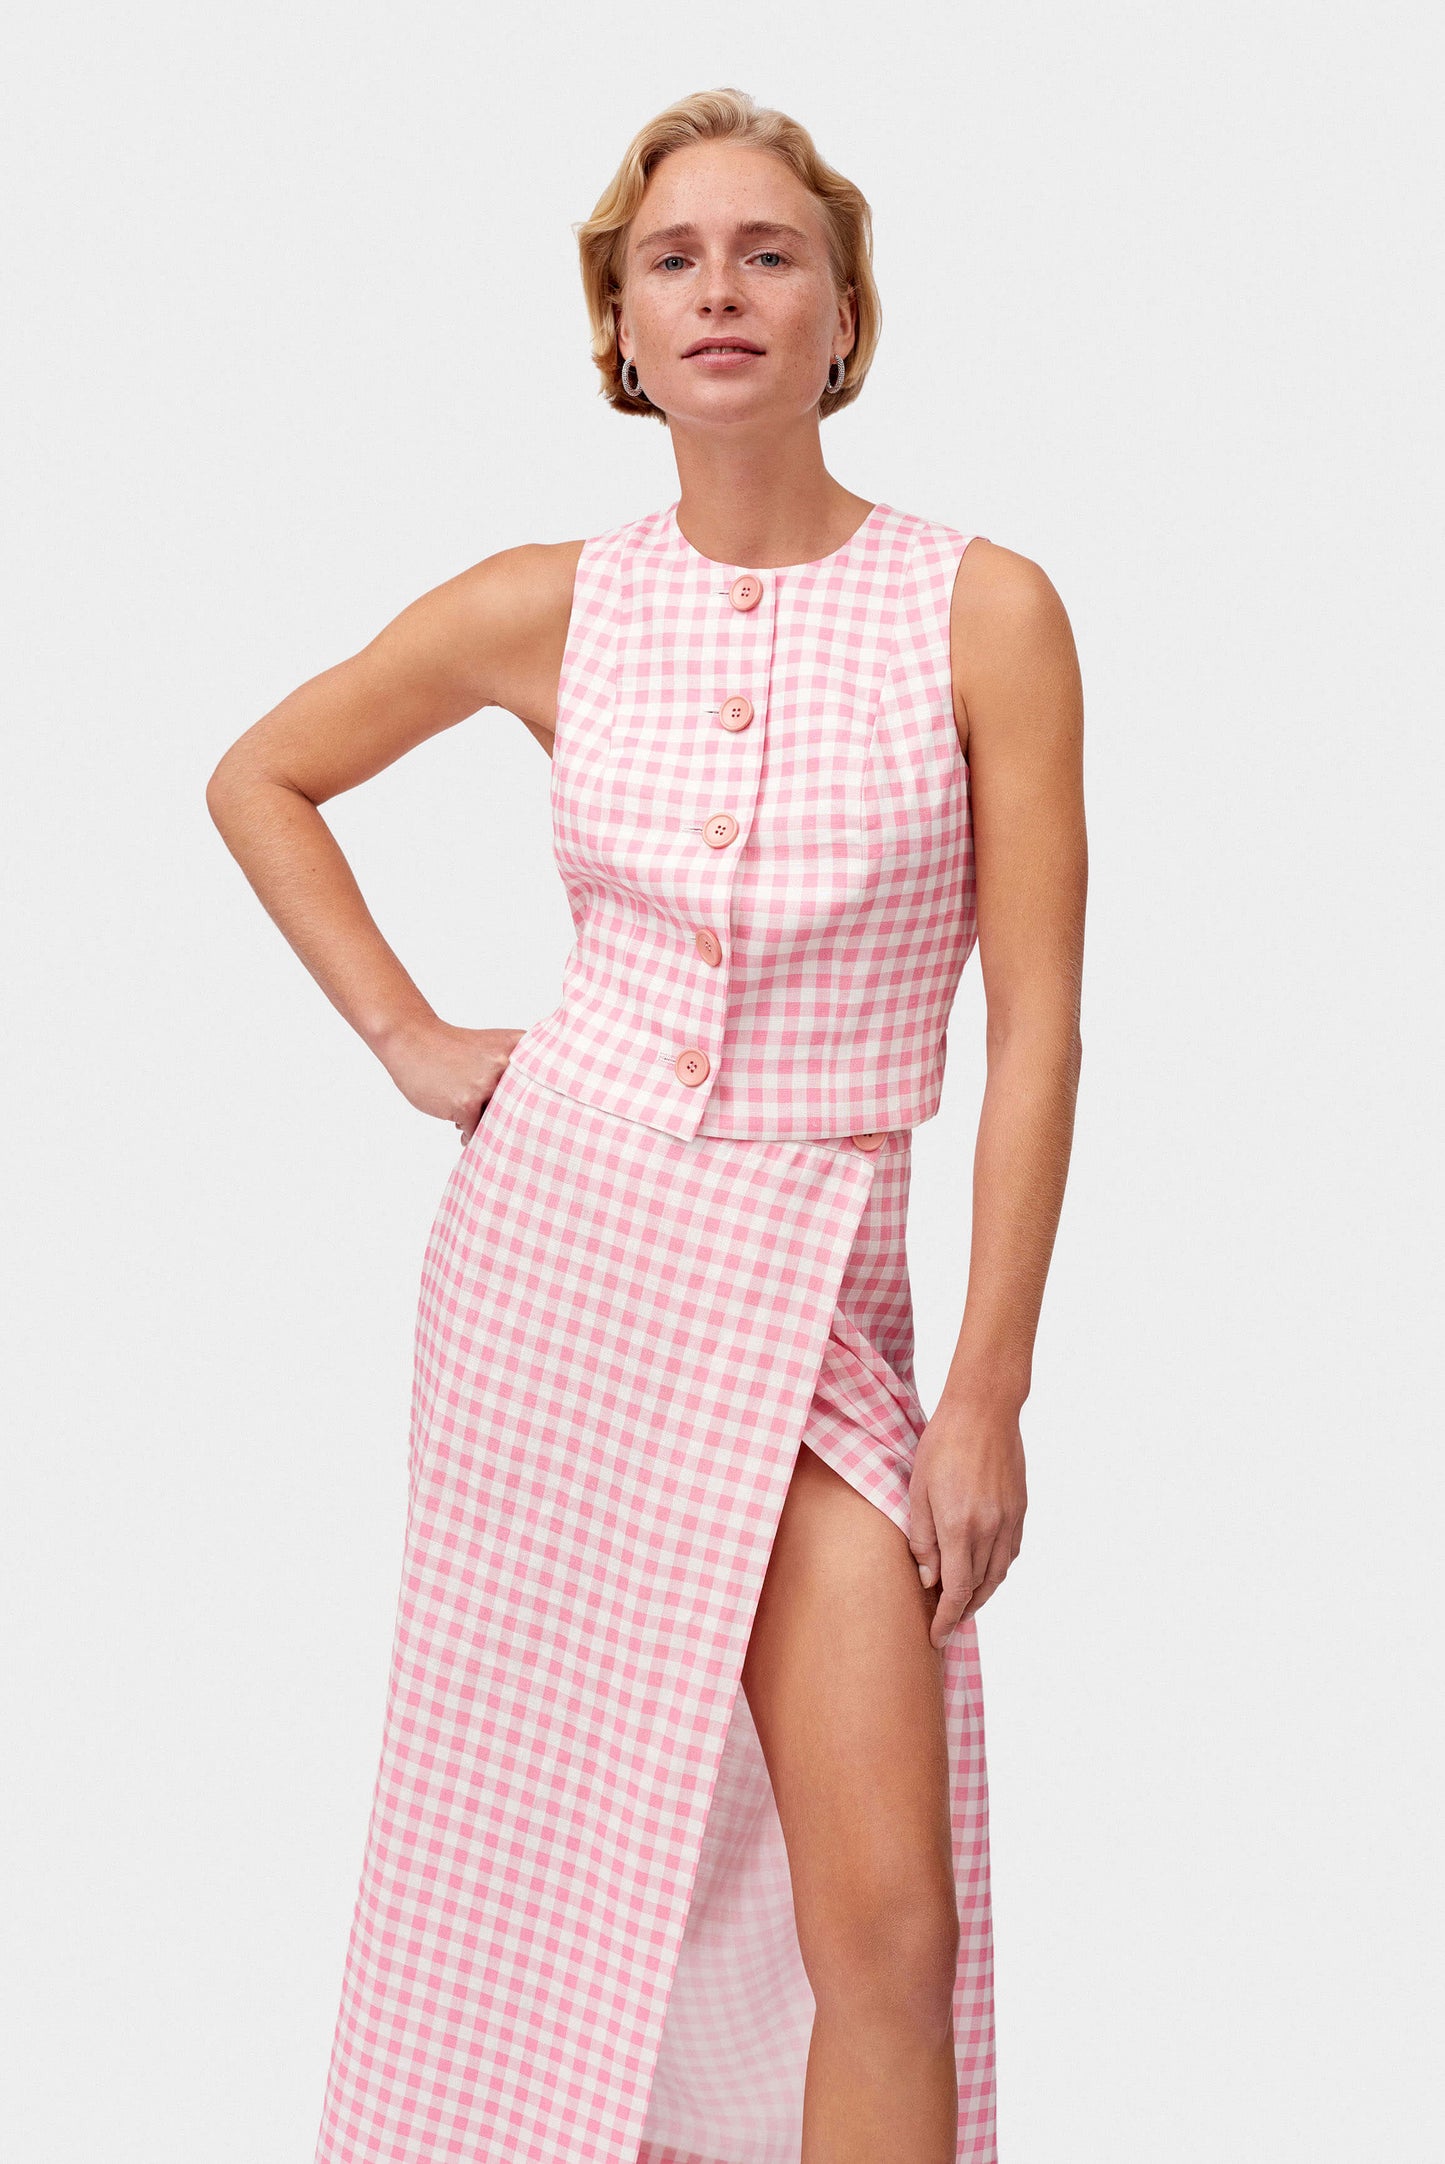 Lili Marleen Skirt in Pink Vichy